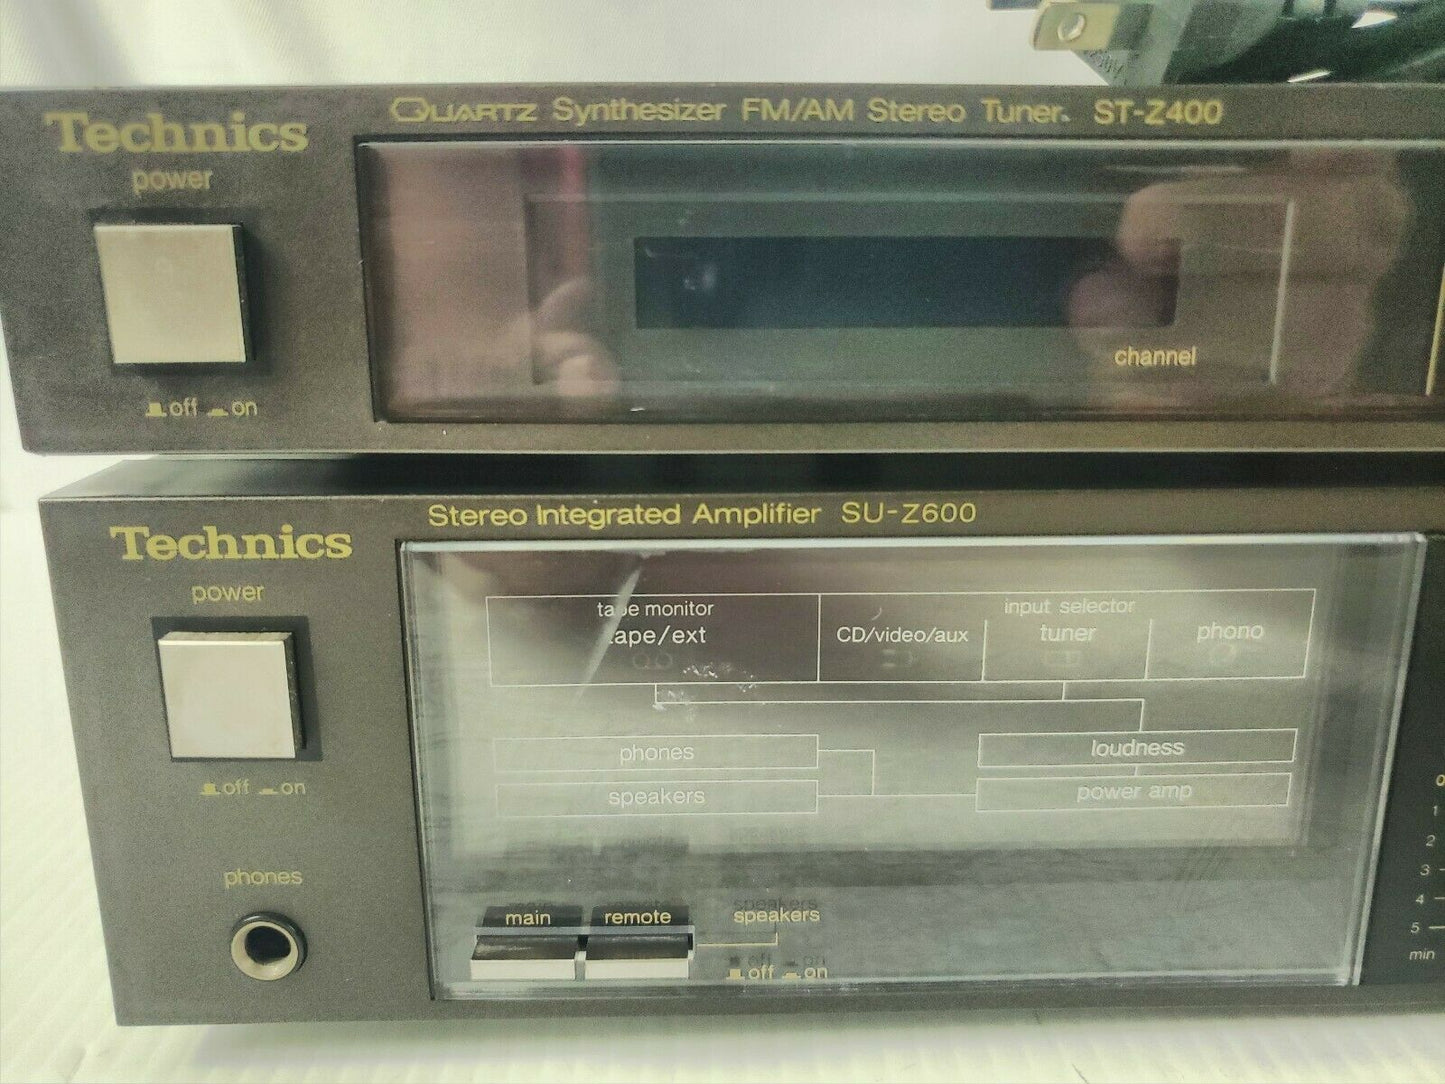 Technics SU-600 Amp Amplifier &  ST-Z400 Quartz Synthesizer FM/AM Stereo Tuner